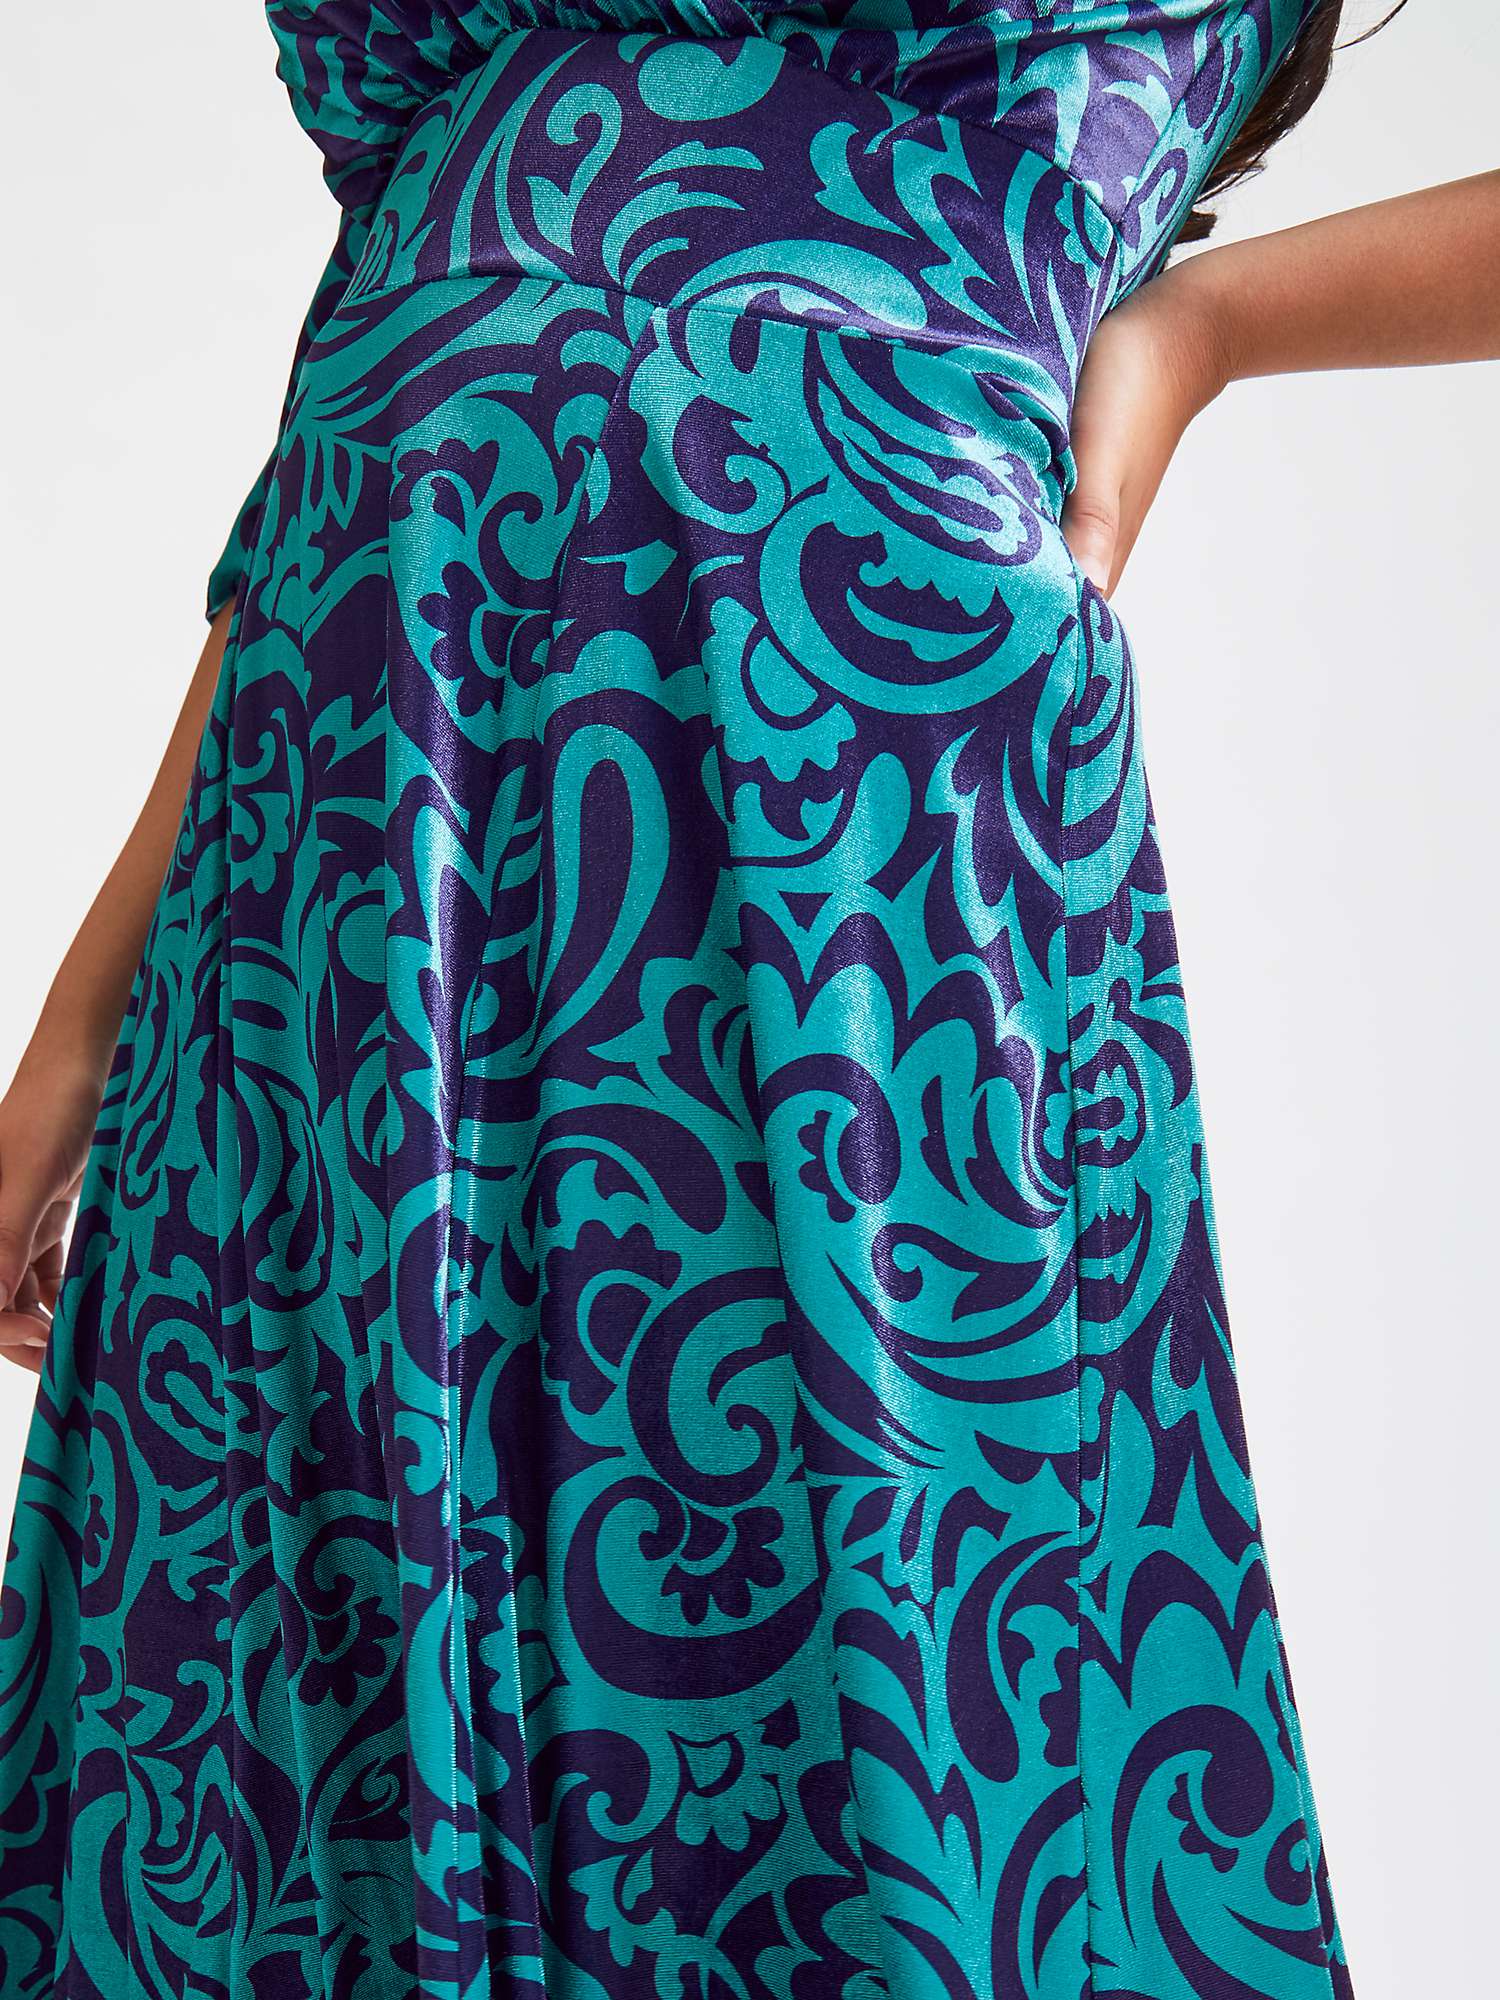 Buy Scarlett & Jo Verity Floral Maxi Dress, Indigo/Teal Online at johnlewis.com